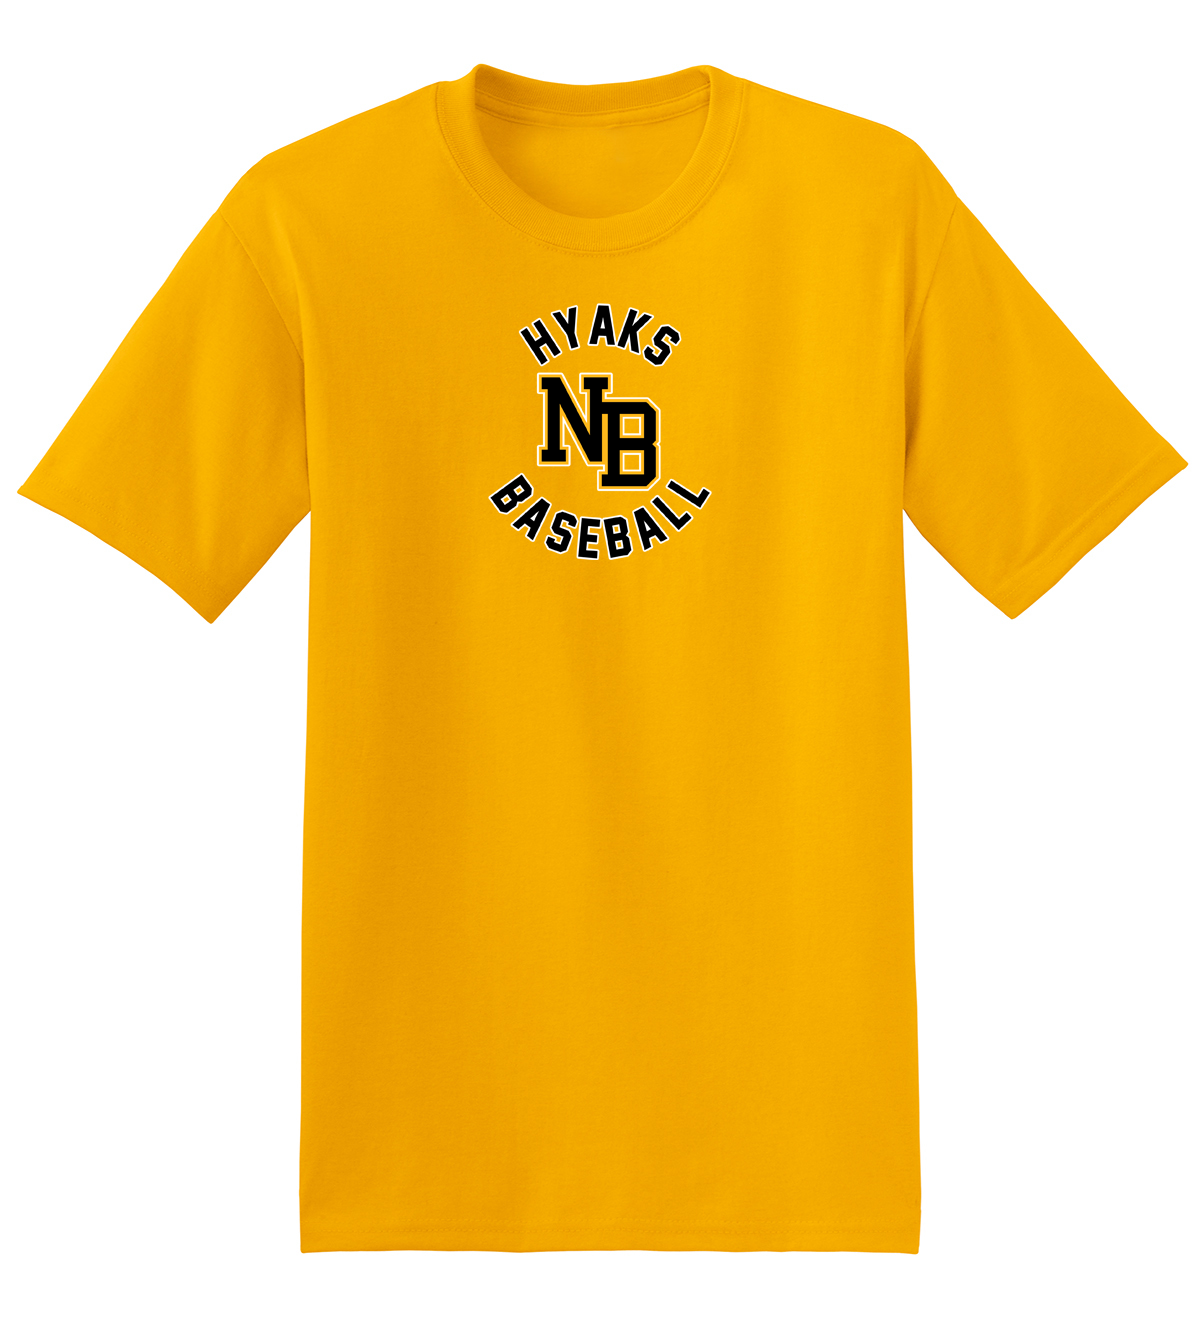 North Beach Baseball T-Shirt